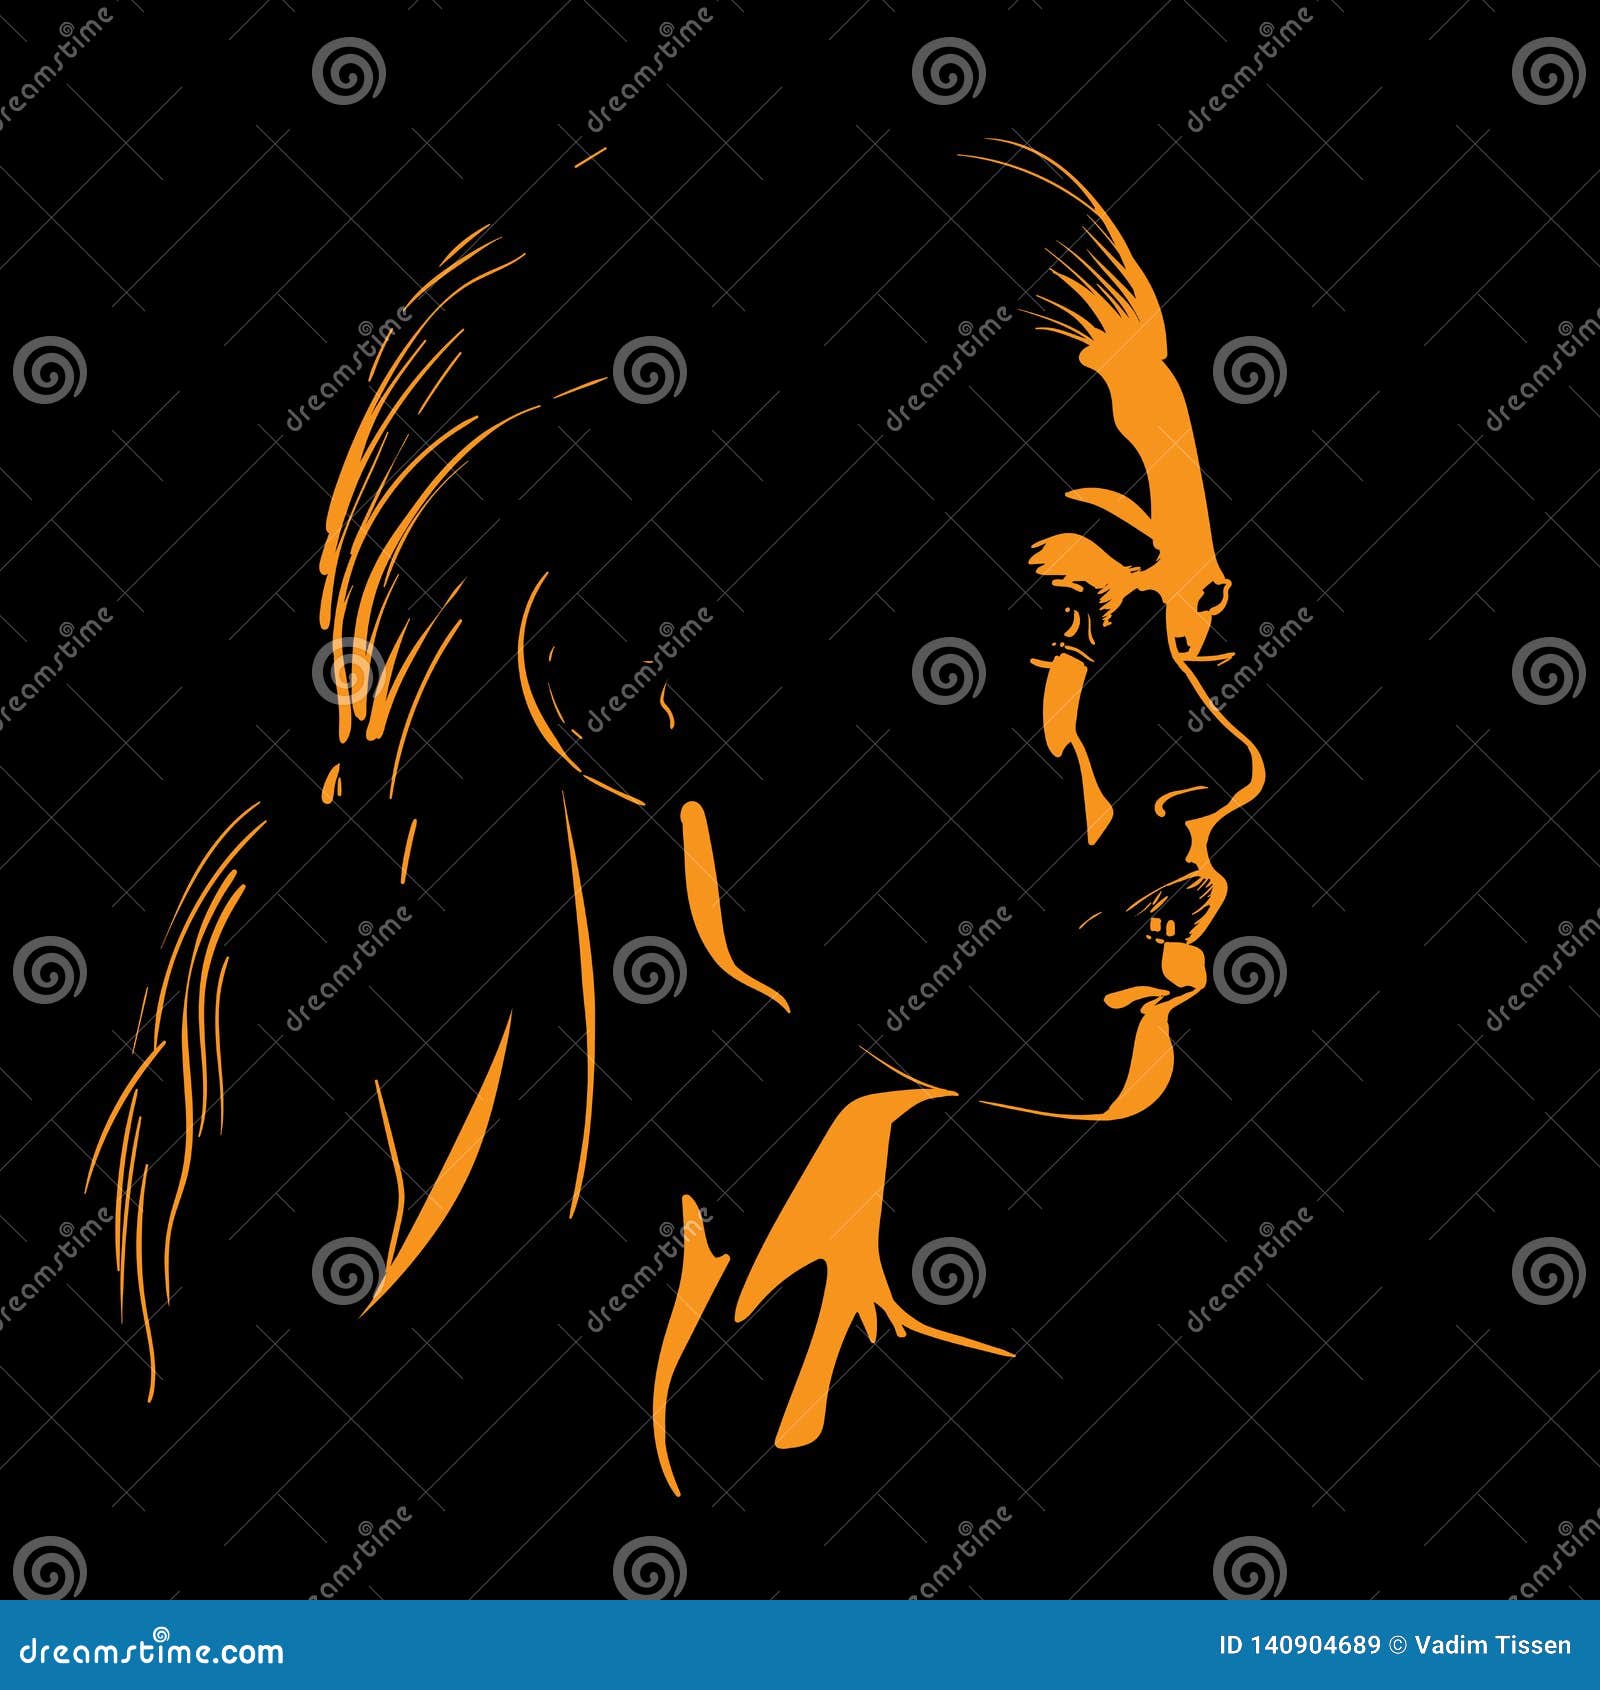 beauty woman face silhouette in contrast backlight. .